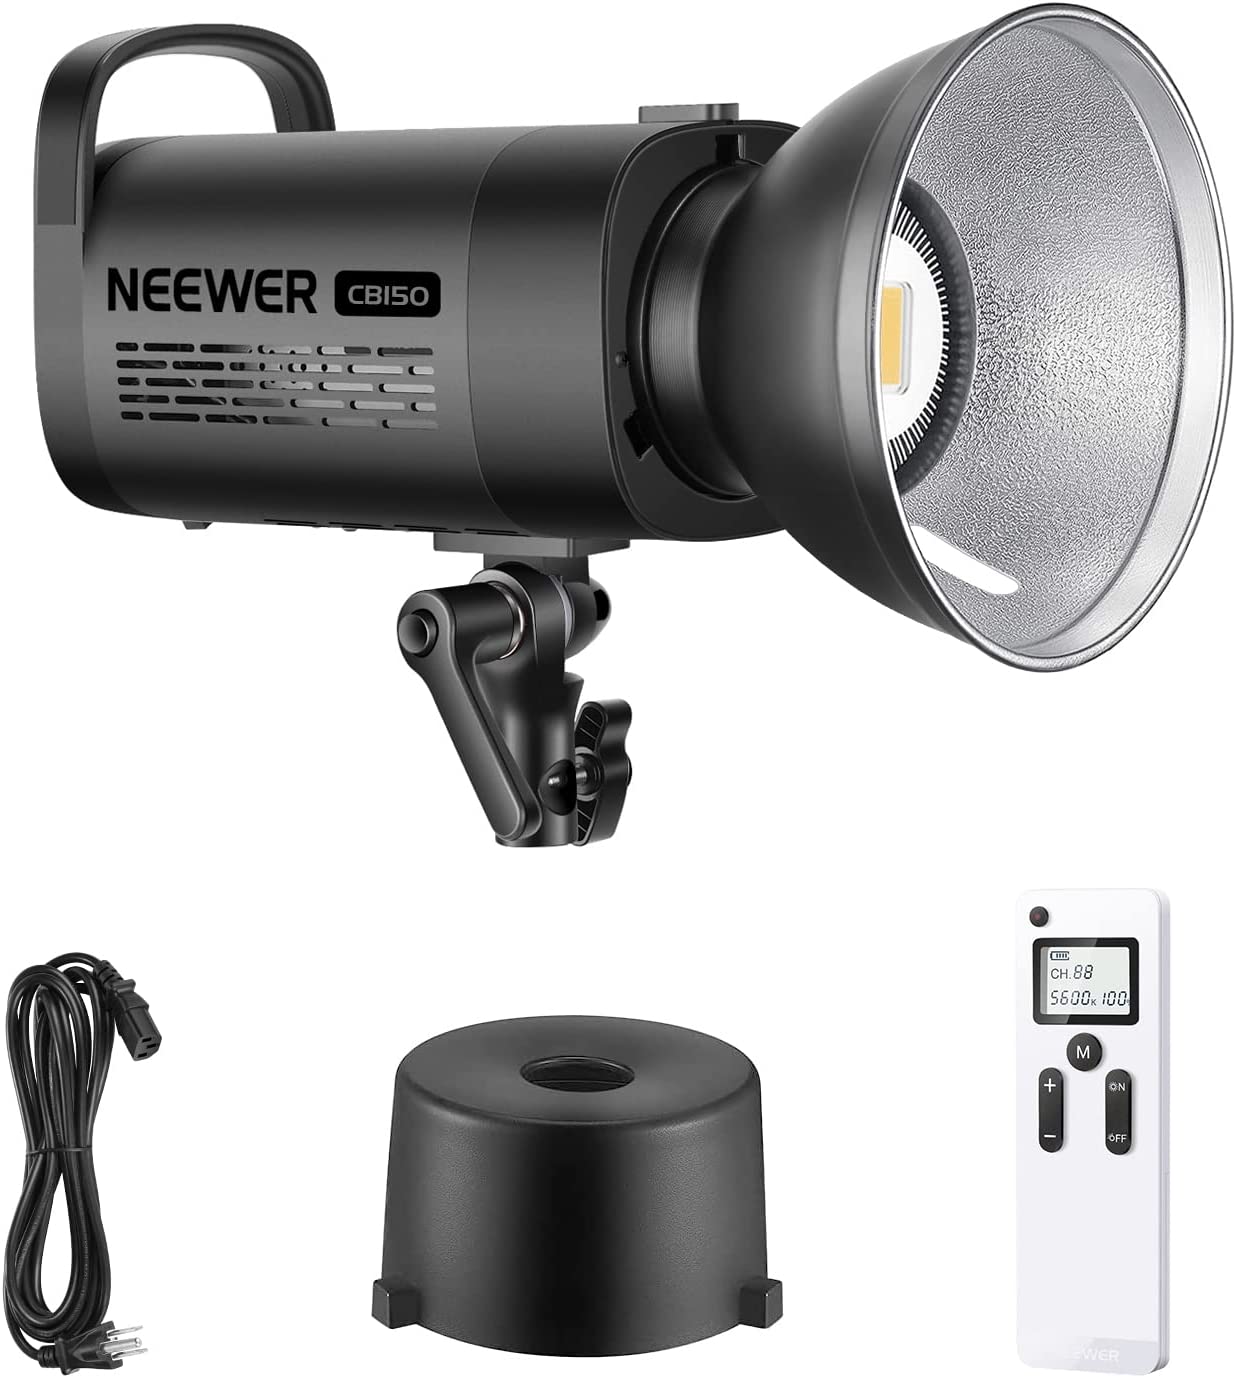 Luz LED Neewer CB150 150 W